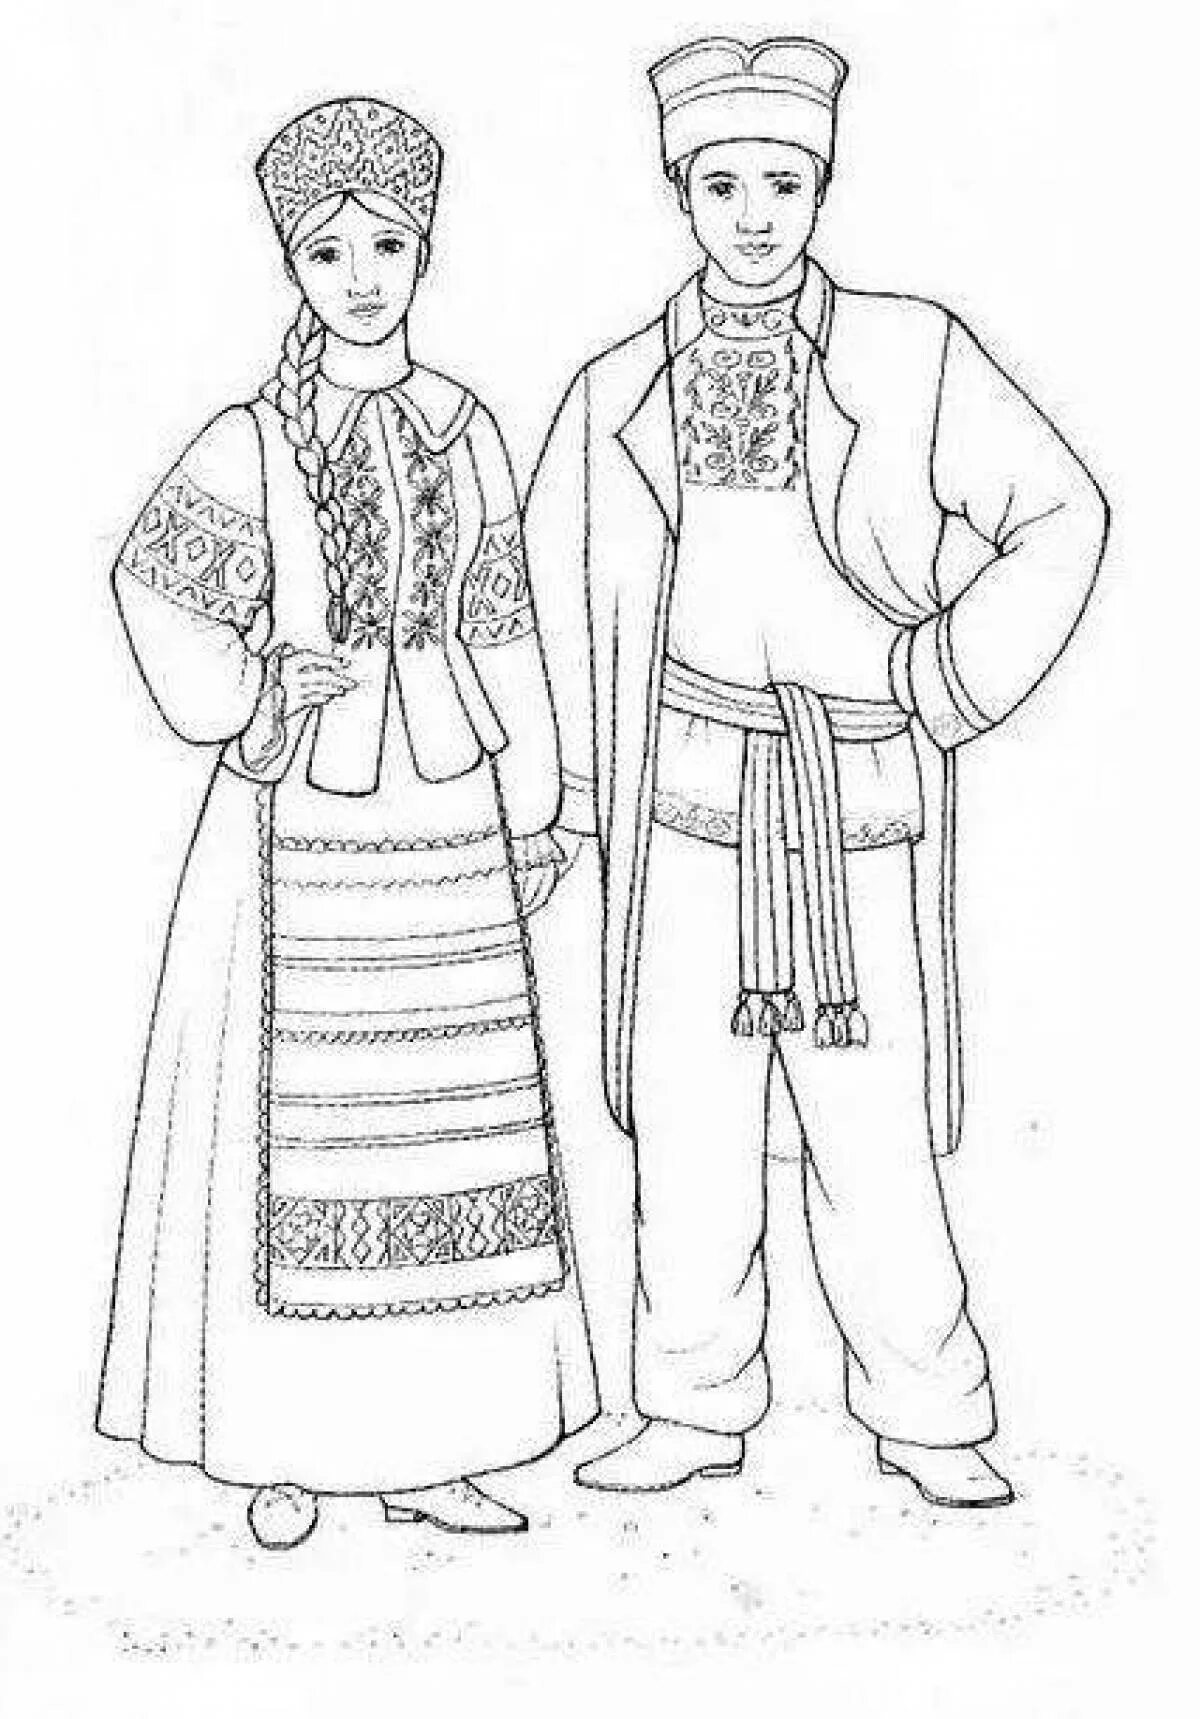 Раскраски национальная россия. Национальный костюм карачаевцев раскраска. Национальный костюм киргизов раскраска. Национальный костюм удмуртов раскраска. Национальный костюм марийцев раскраска.